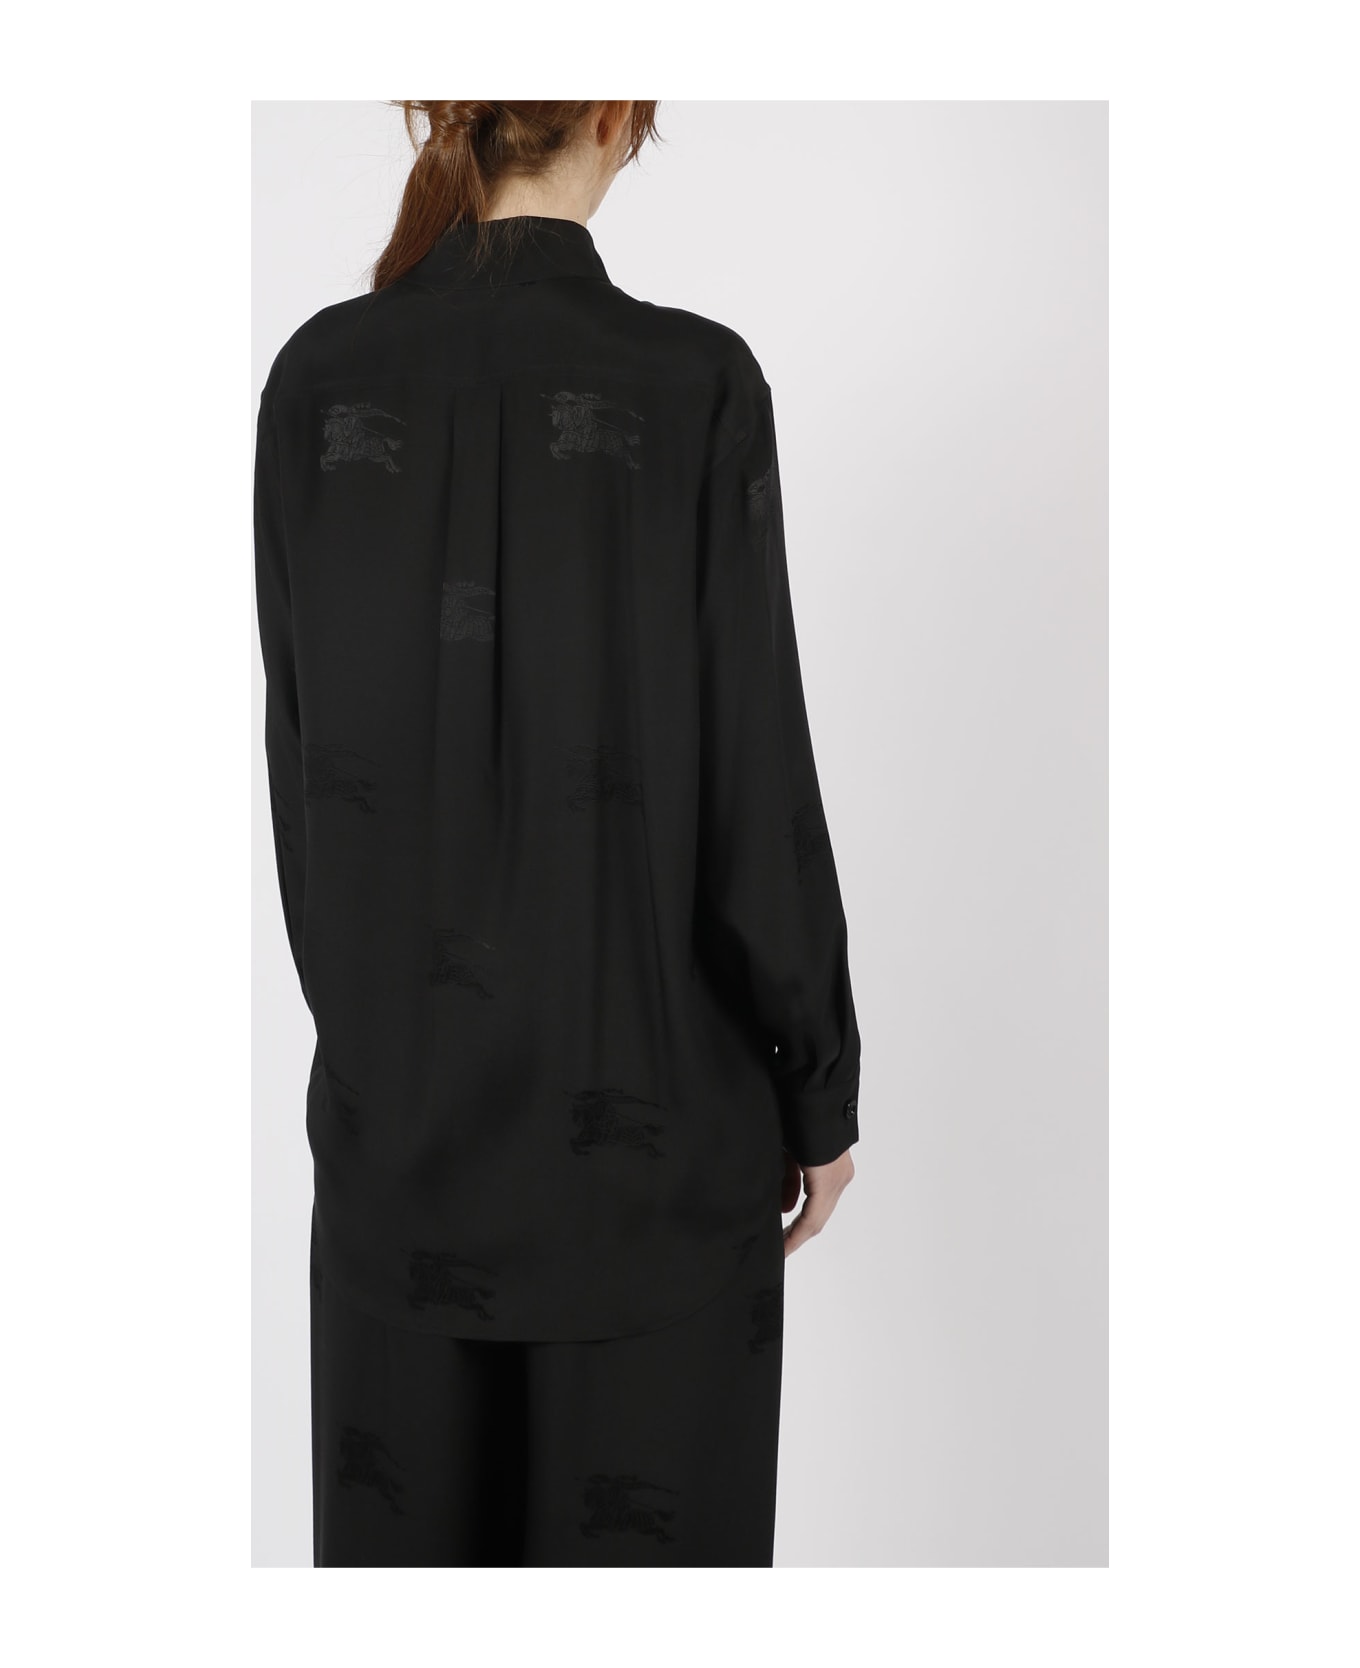 Burberry Ivanna Shirt - Black シャツ